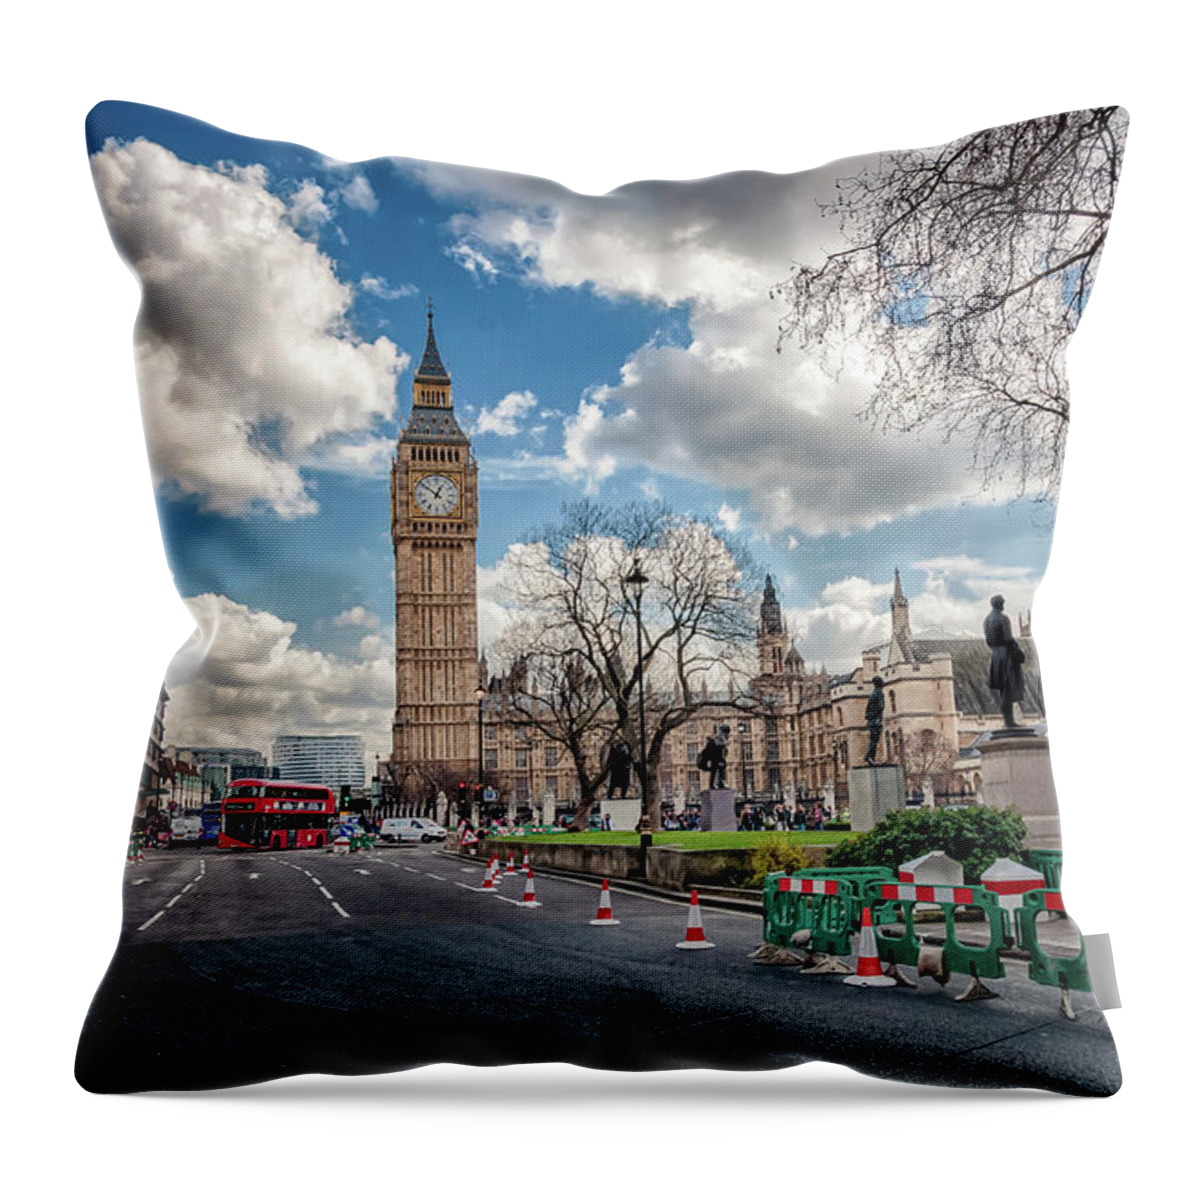 Ben Throw Pillow featuring the photograph Busy road by Mariusz Talarek